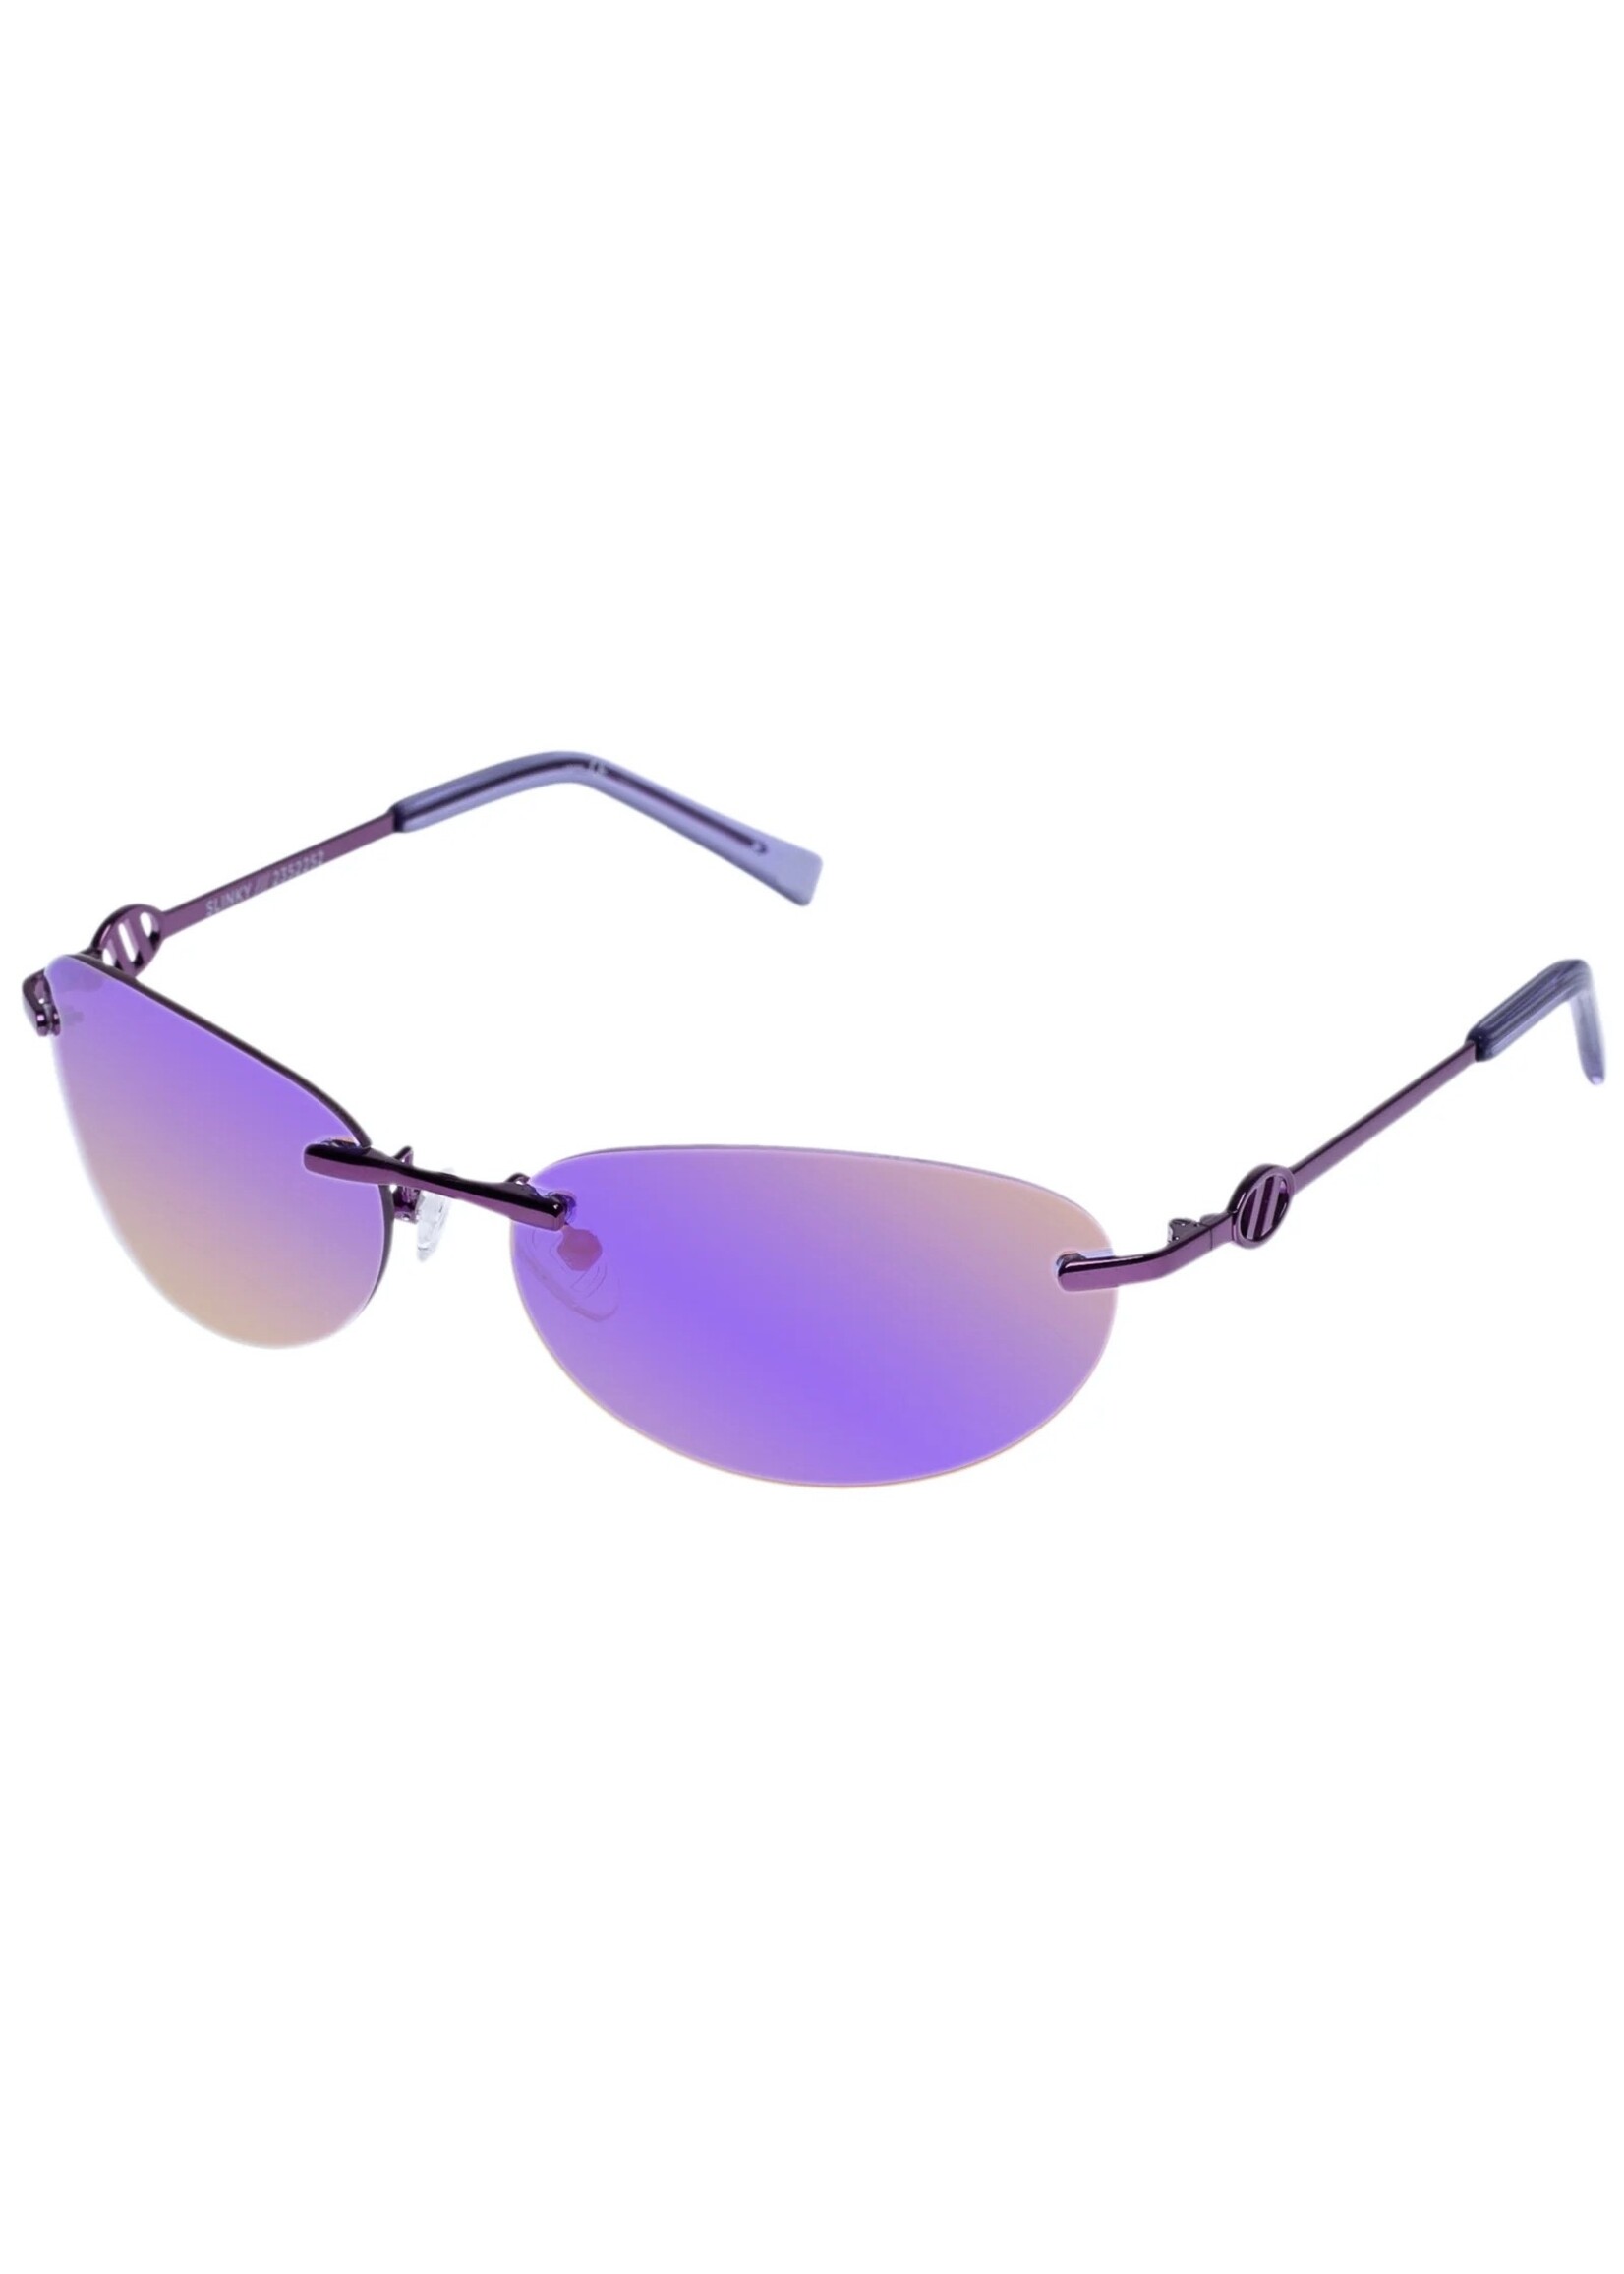 Le Specs Sunglasses "Slinky" by LESPECS